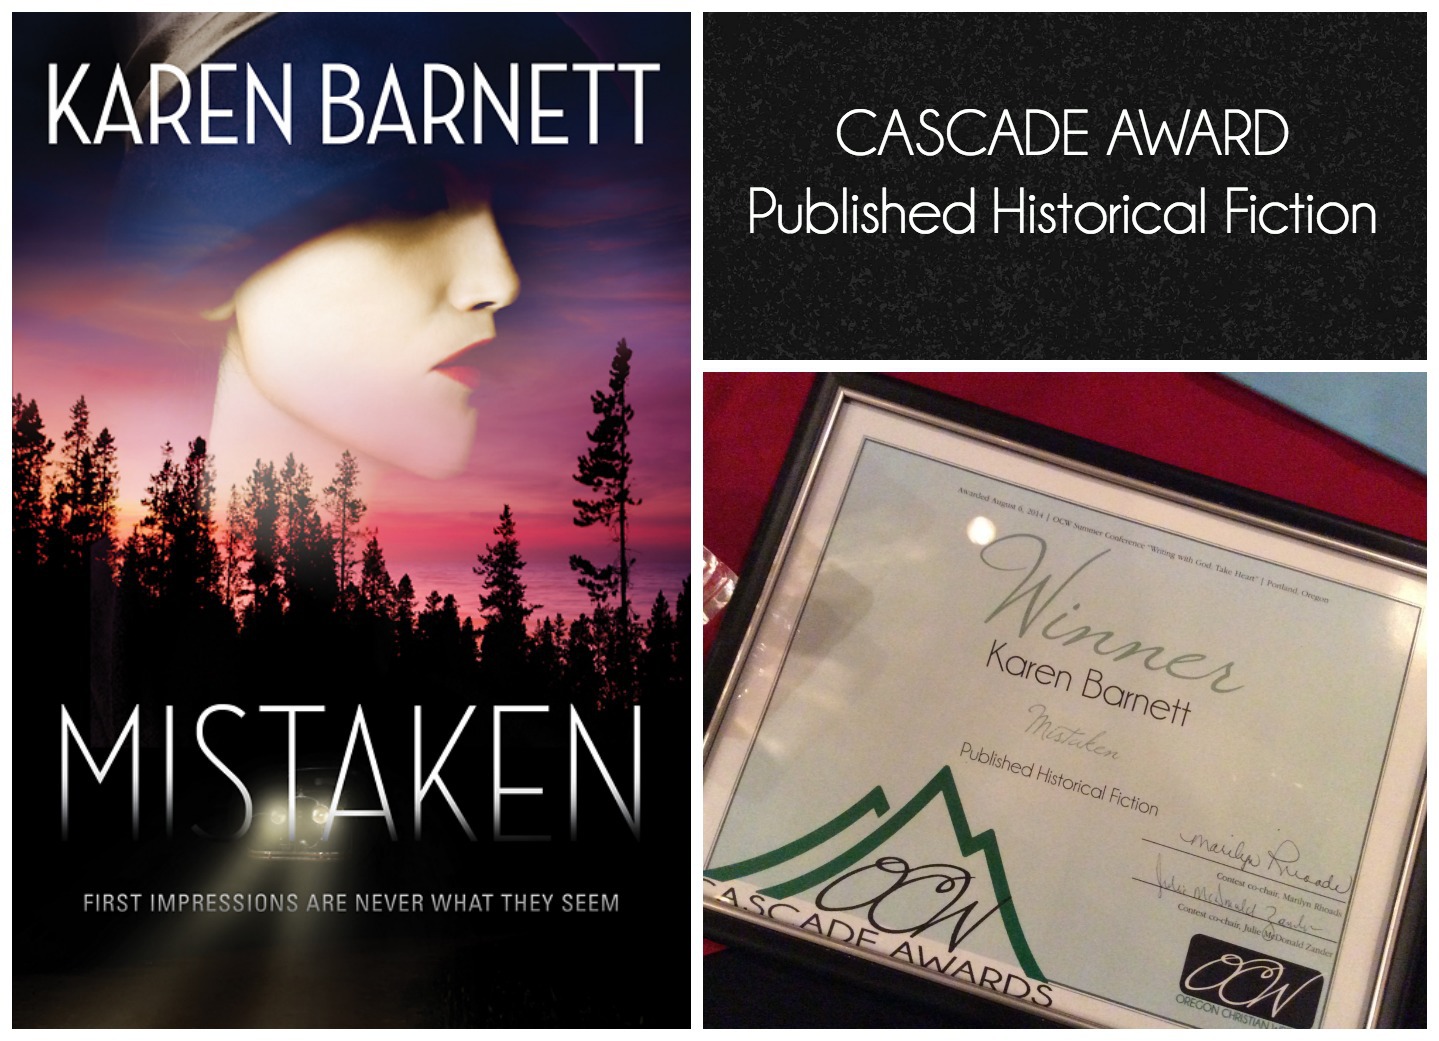 GIVEAWAY celebrating MISTAKEN’s Cascade Award!